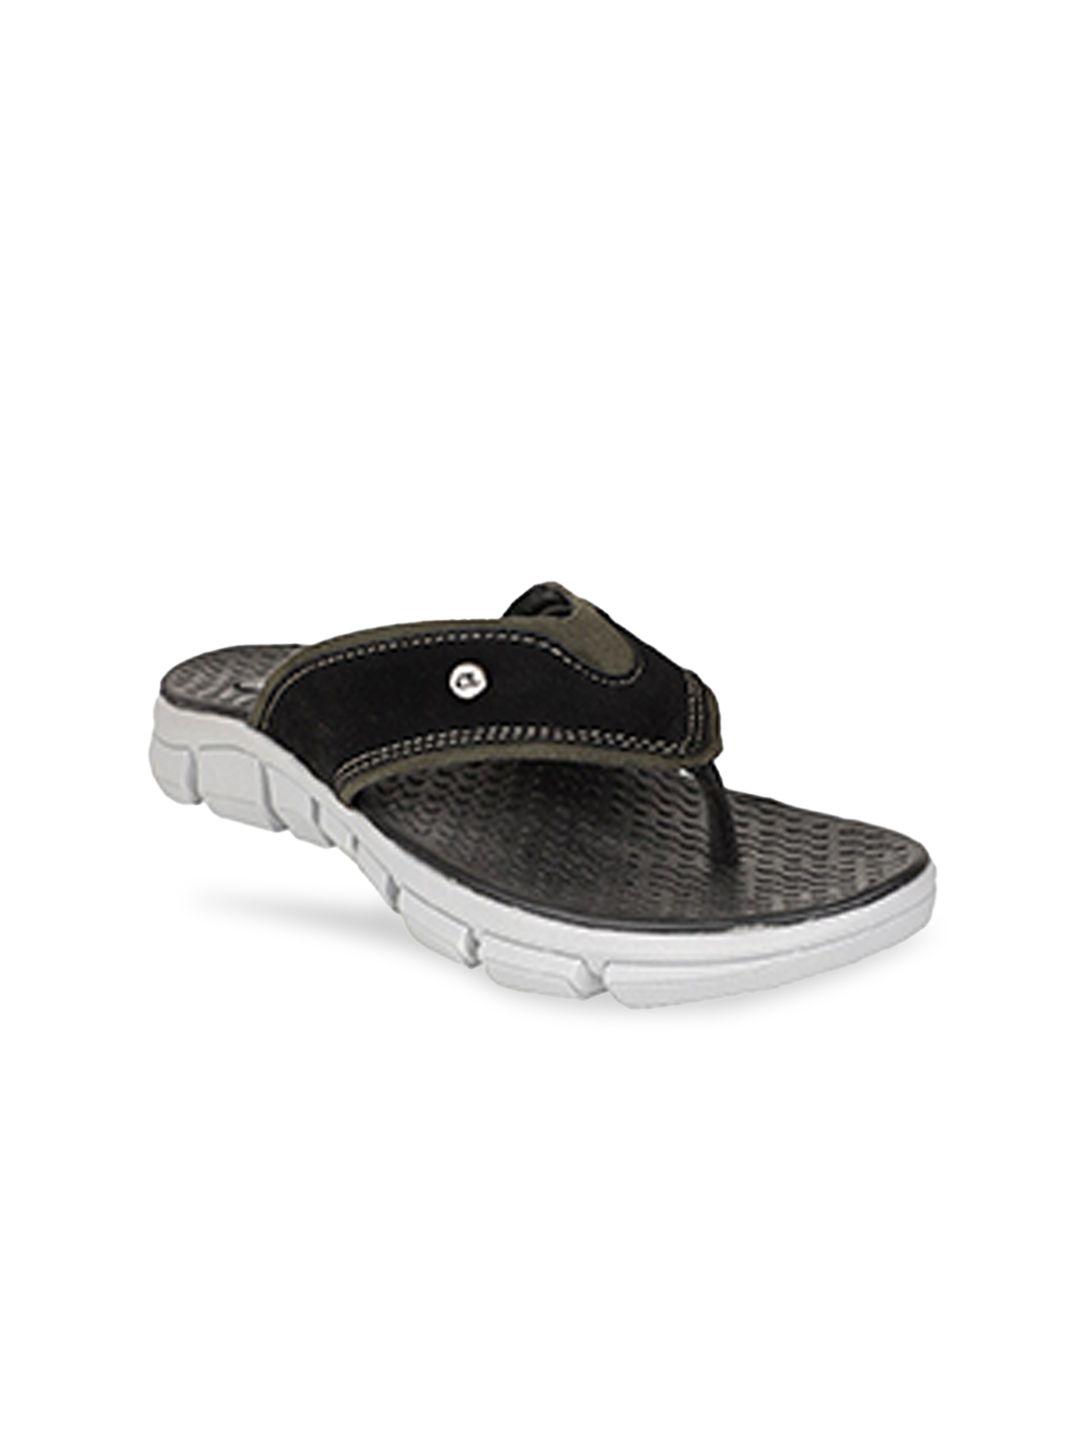 Carlton London Men Olive & Black Casual Comfort Sandals